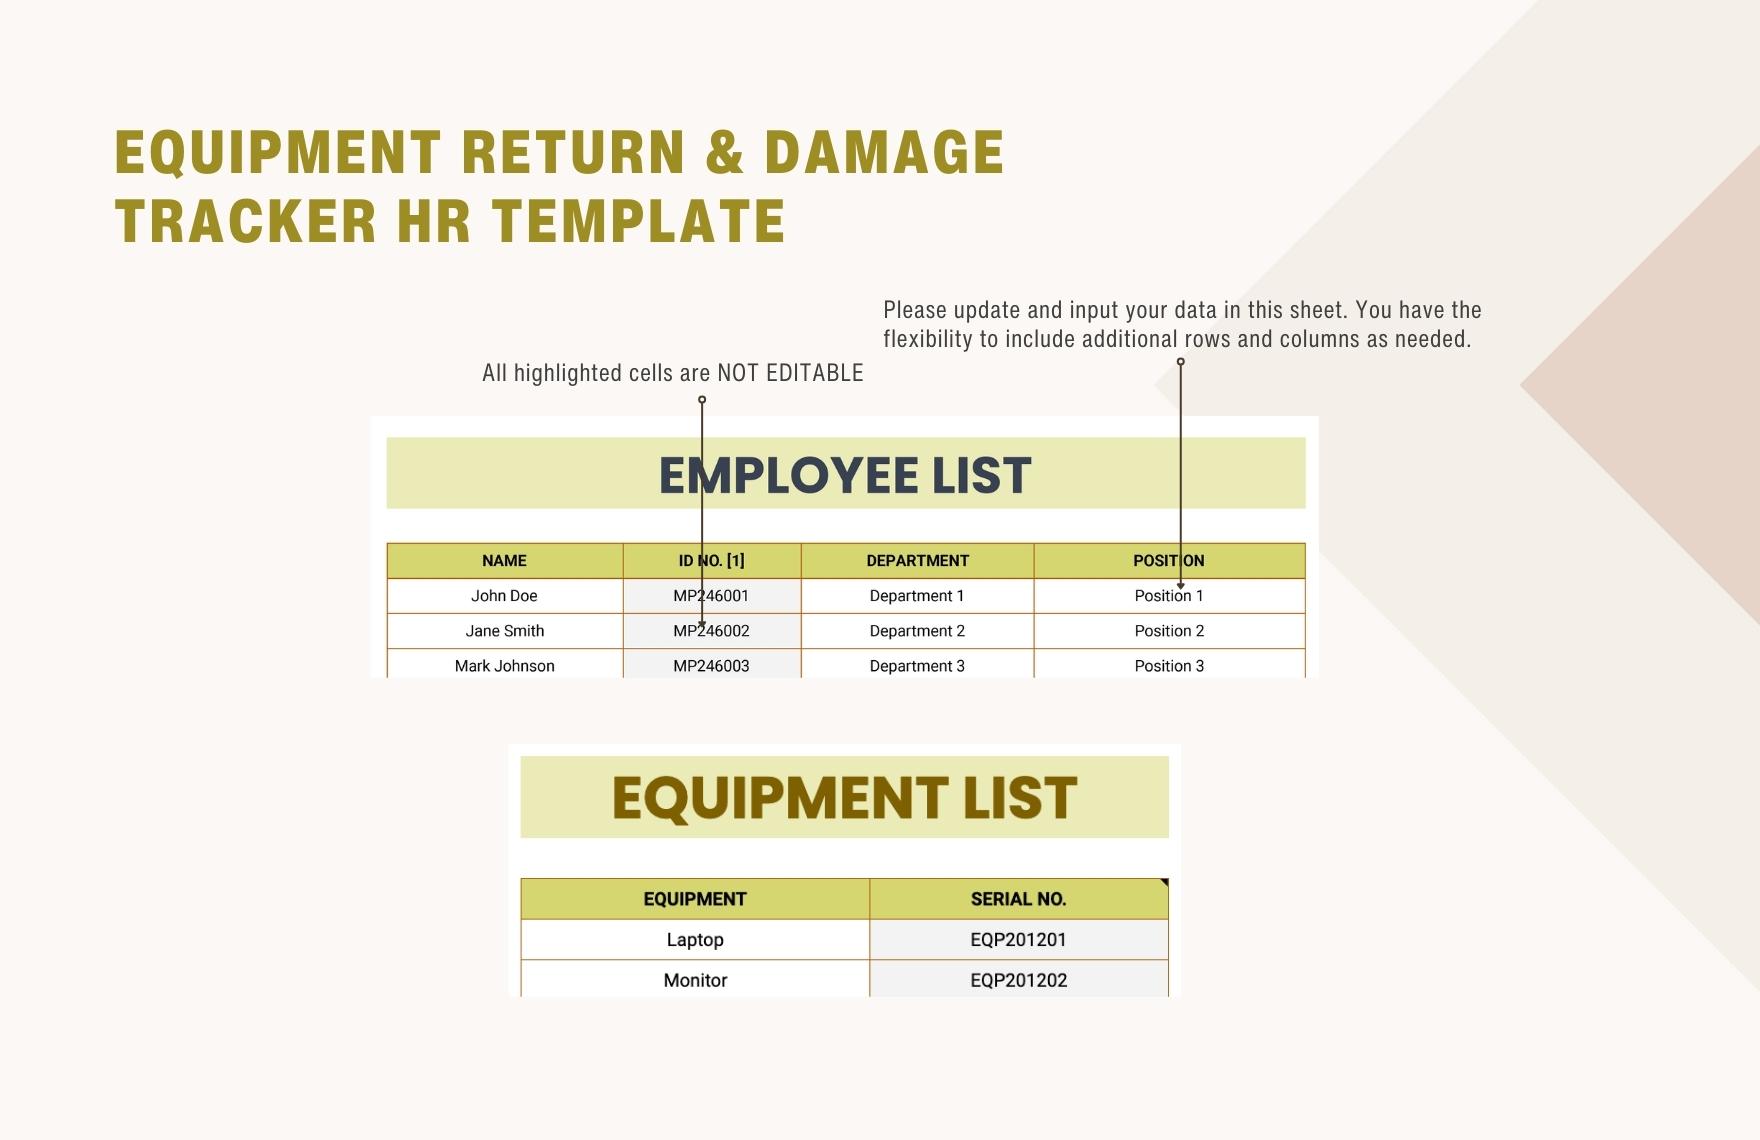 Equipment Return & Damage Tracker HR Template